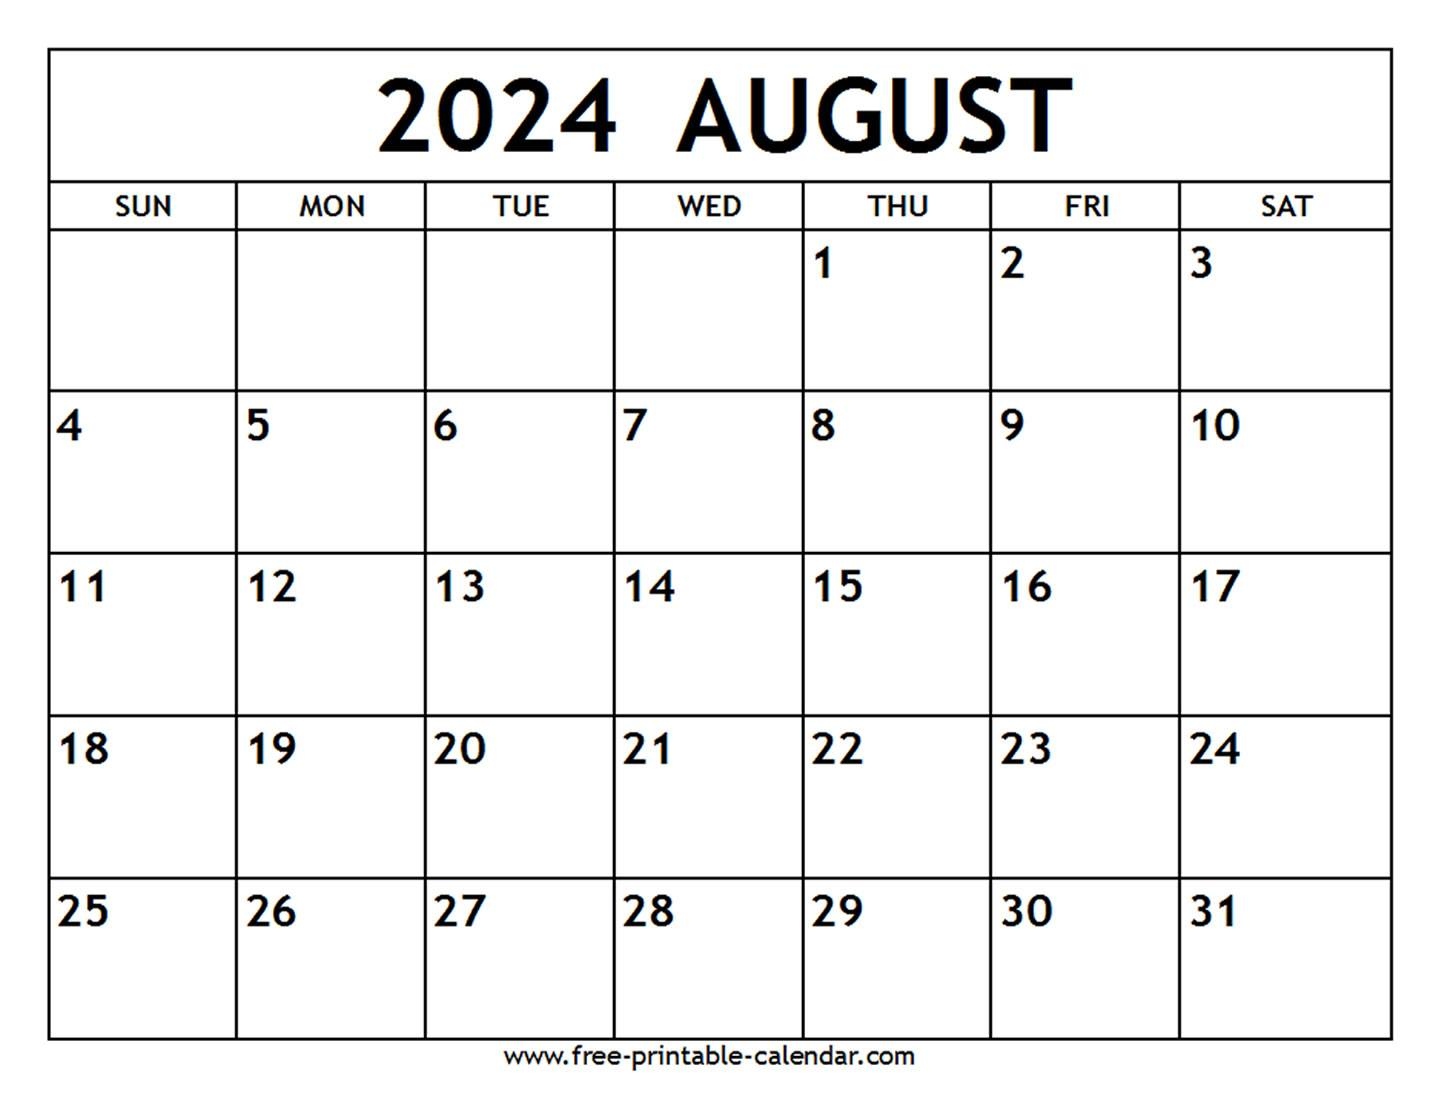 August 2024 Calendar - Free-Printable-Calendar regarding Free Printable Calendar August 2024 To August 2024